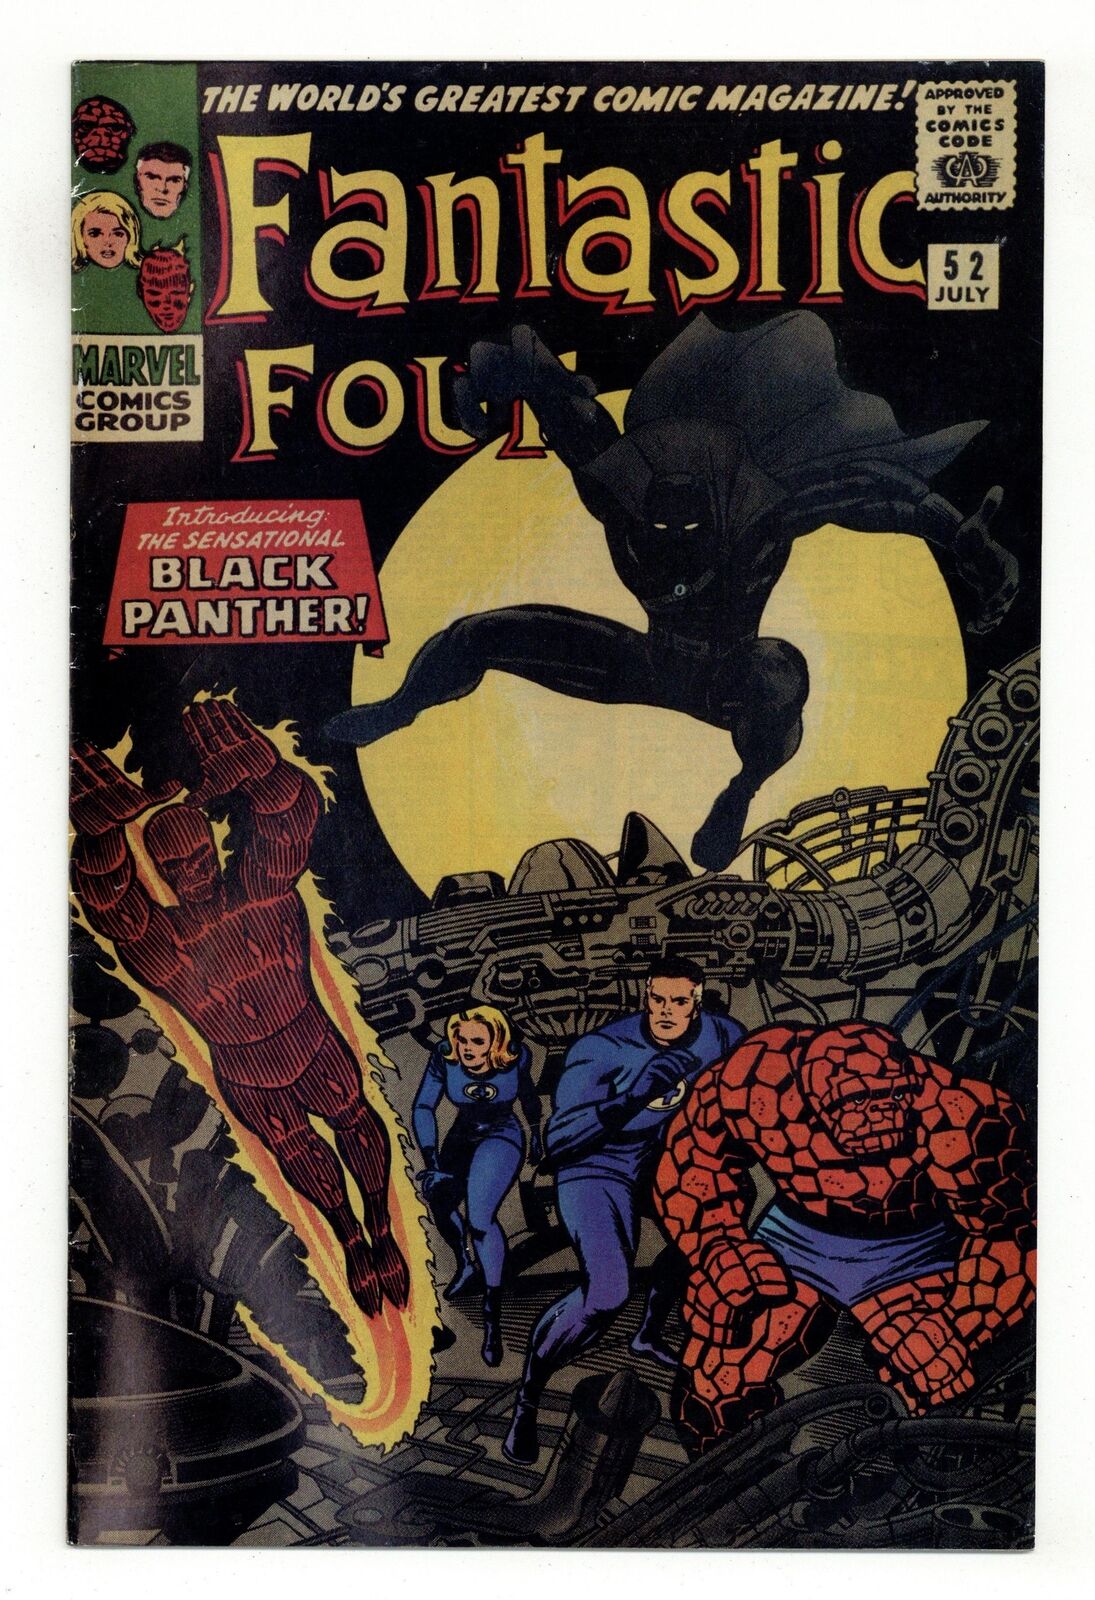 Marvel's Greatest Comics Fantastic Four #52 FN 6.0 2006